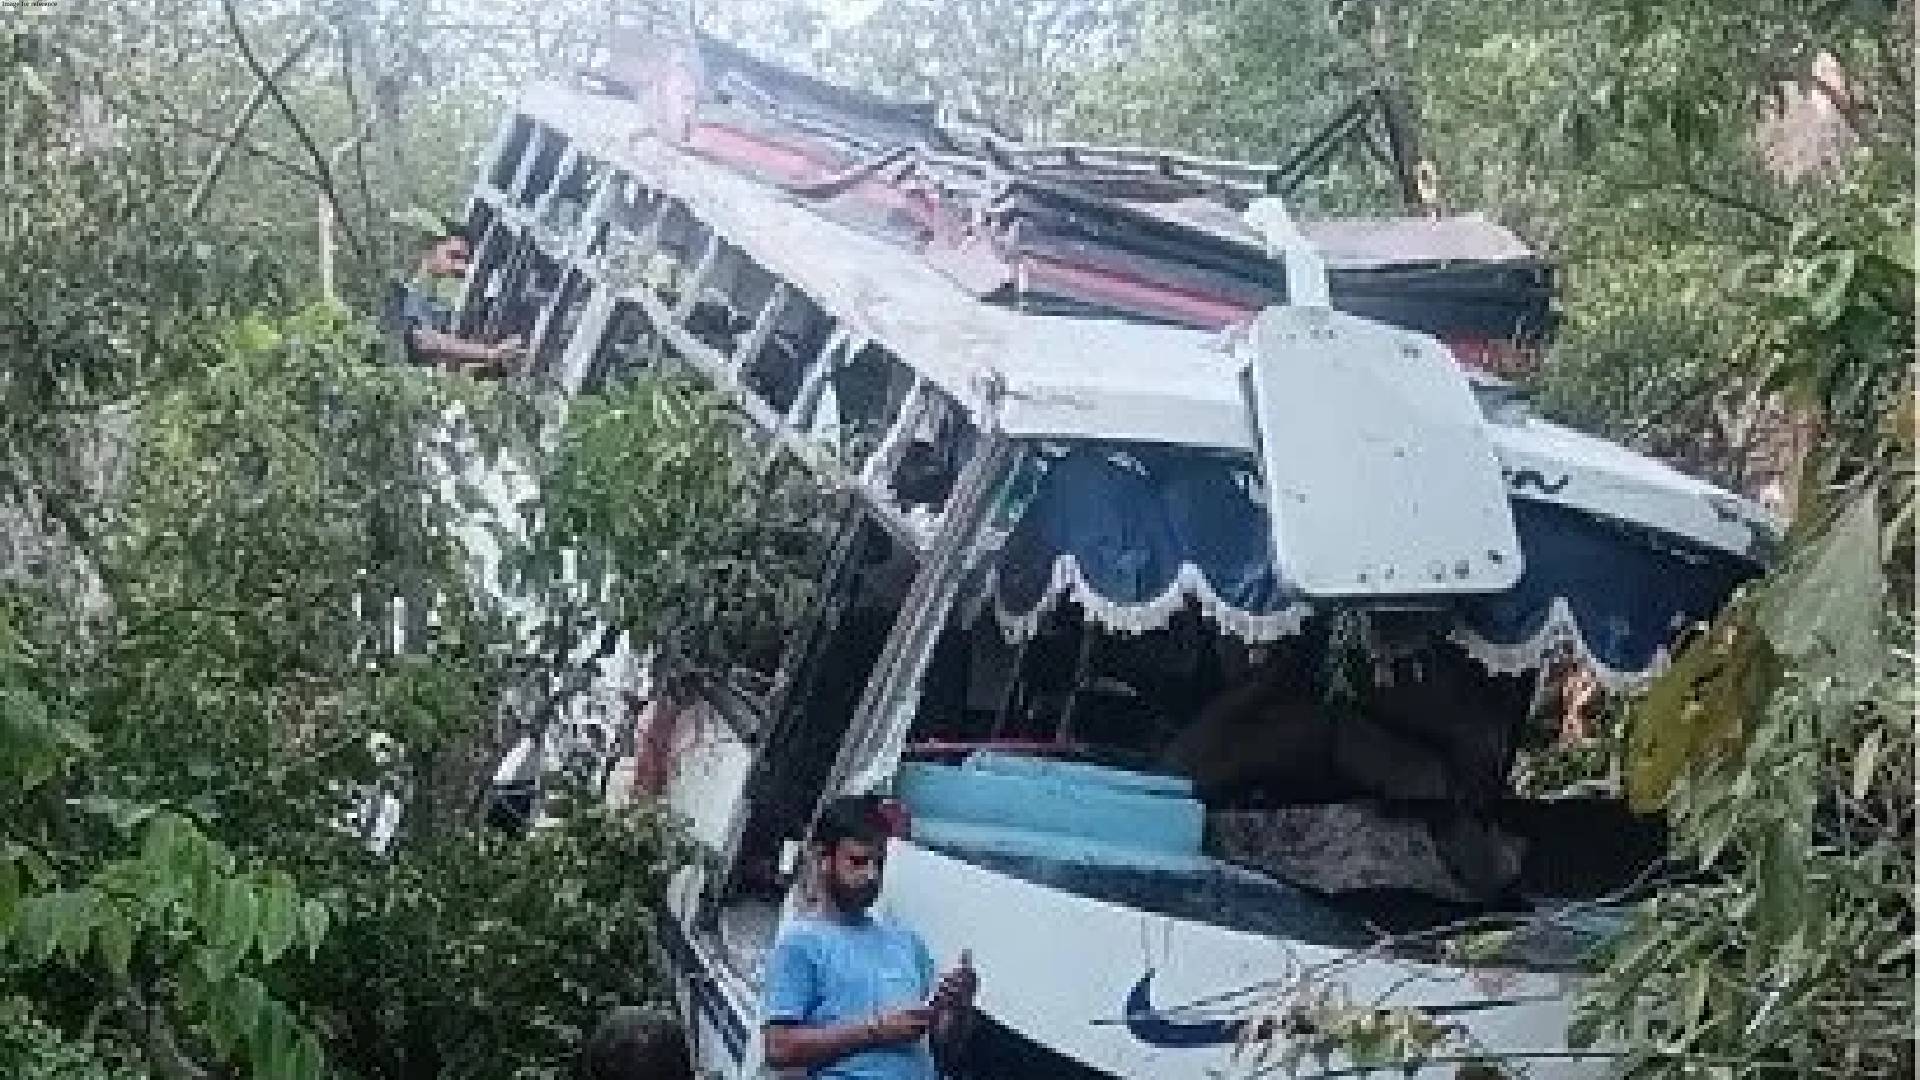 Bodies of four killed in J-K bus terror attack arrive in Jaipur